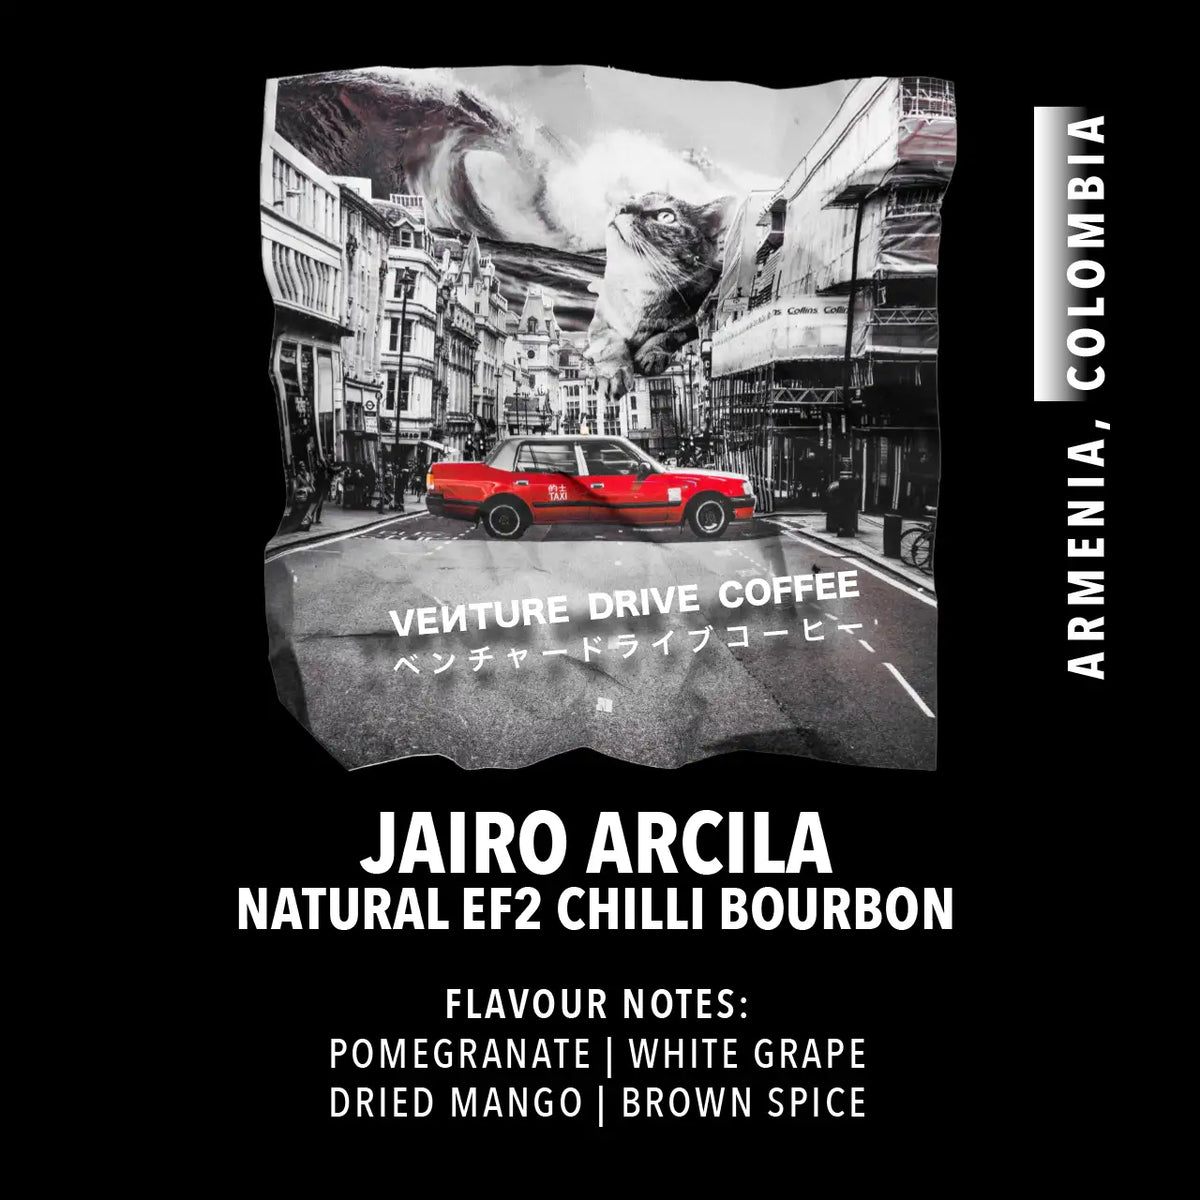 Jairo Arcila Natural EF2 Chilli Bourbon (Colombia)